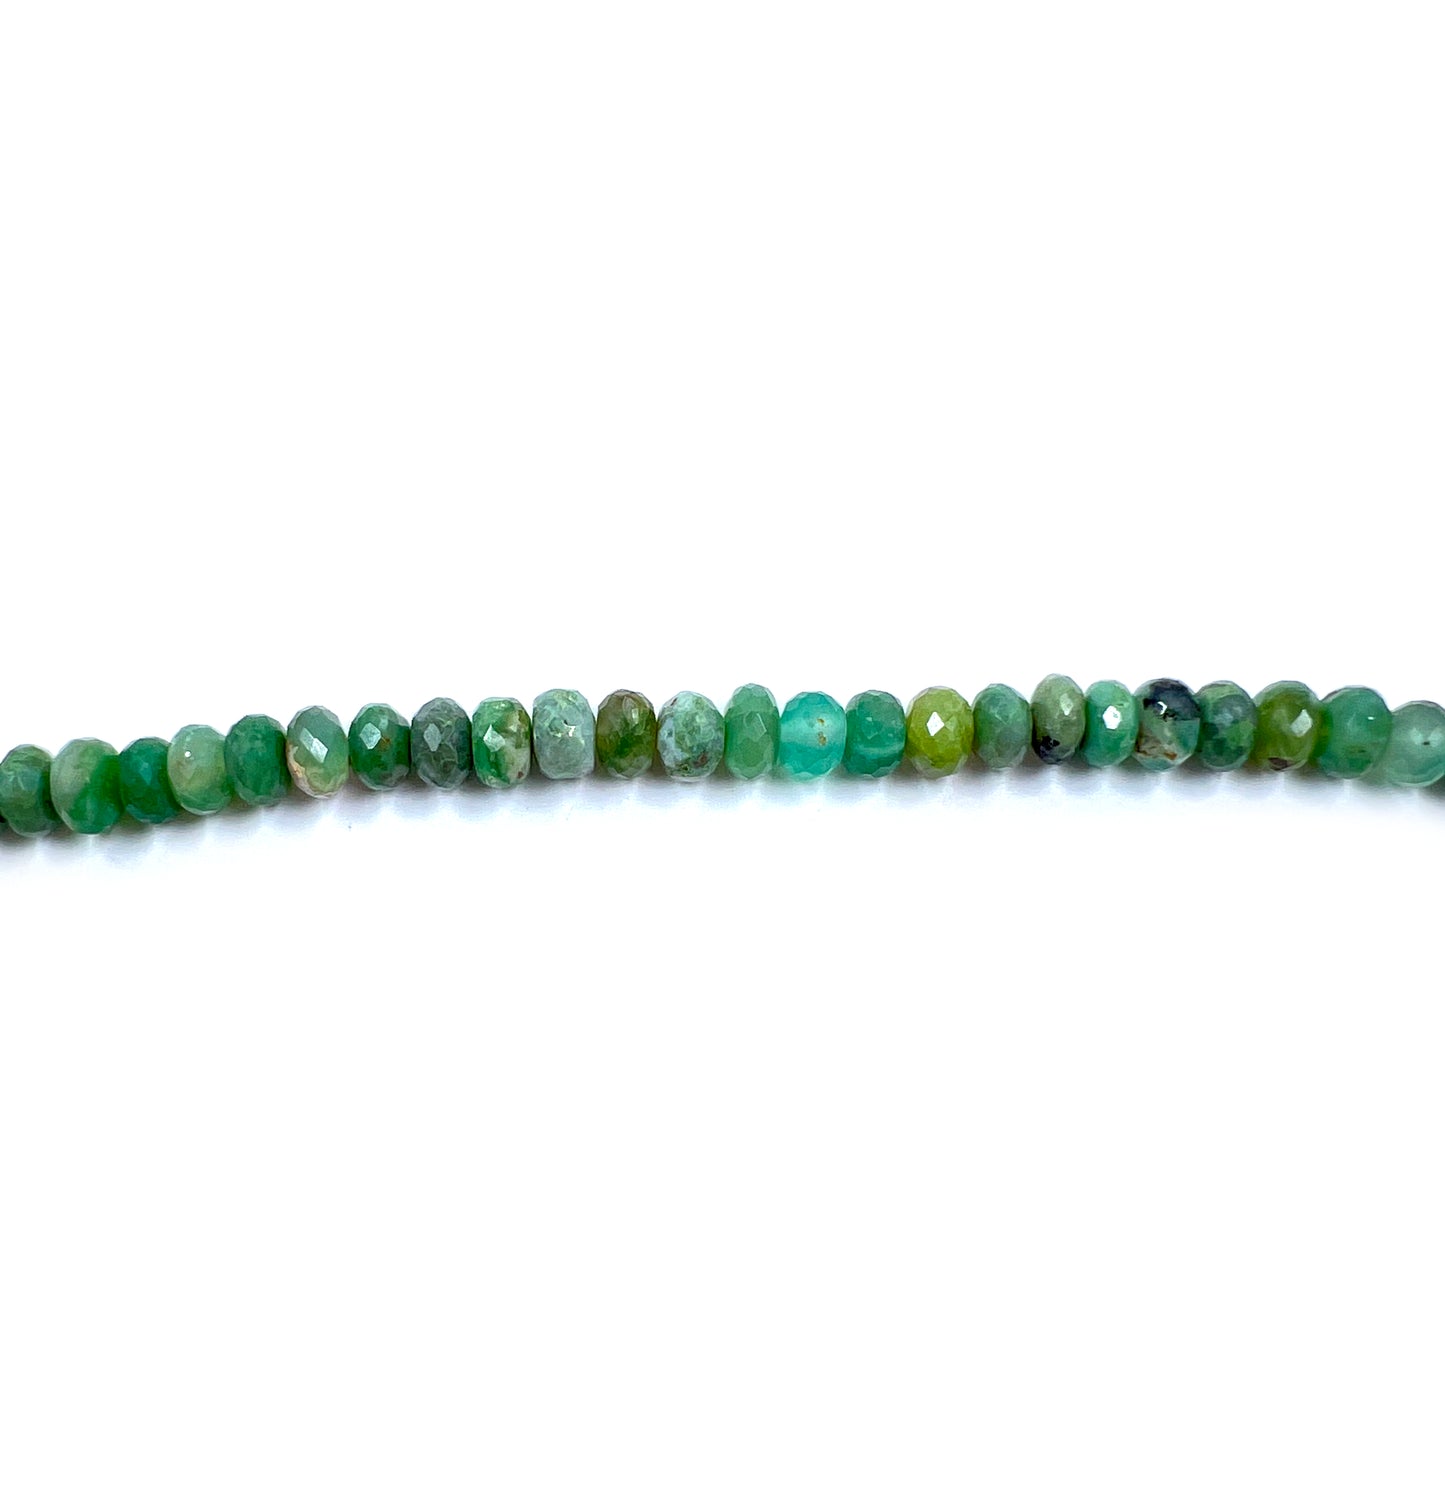 Aquaprase Gemstone Beads